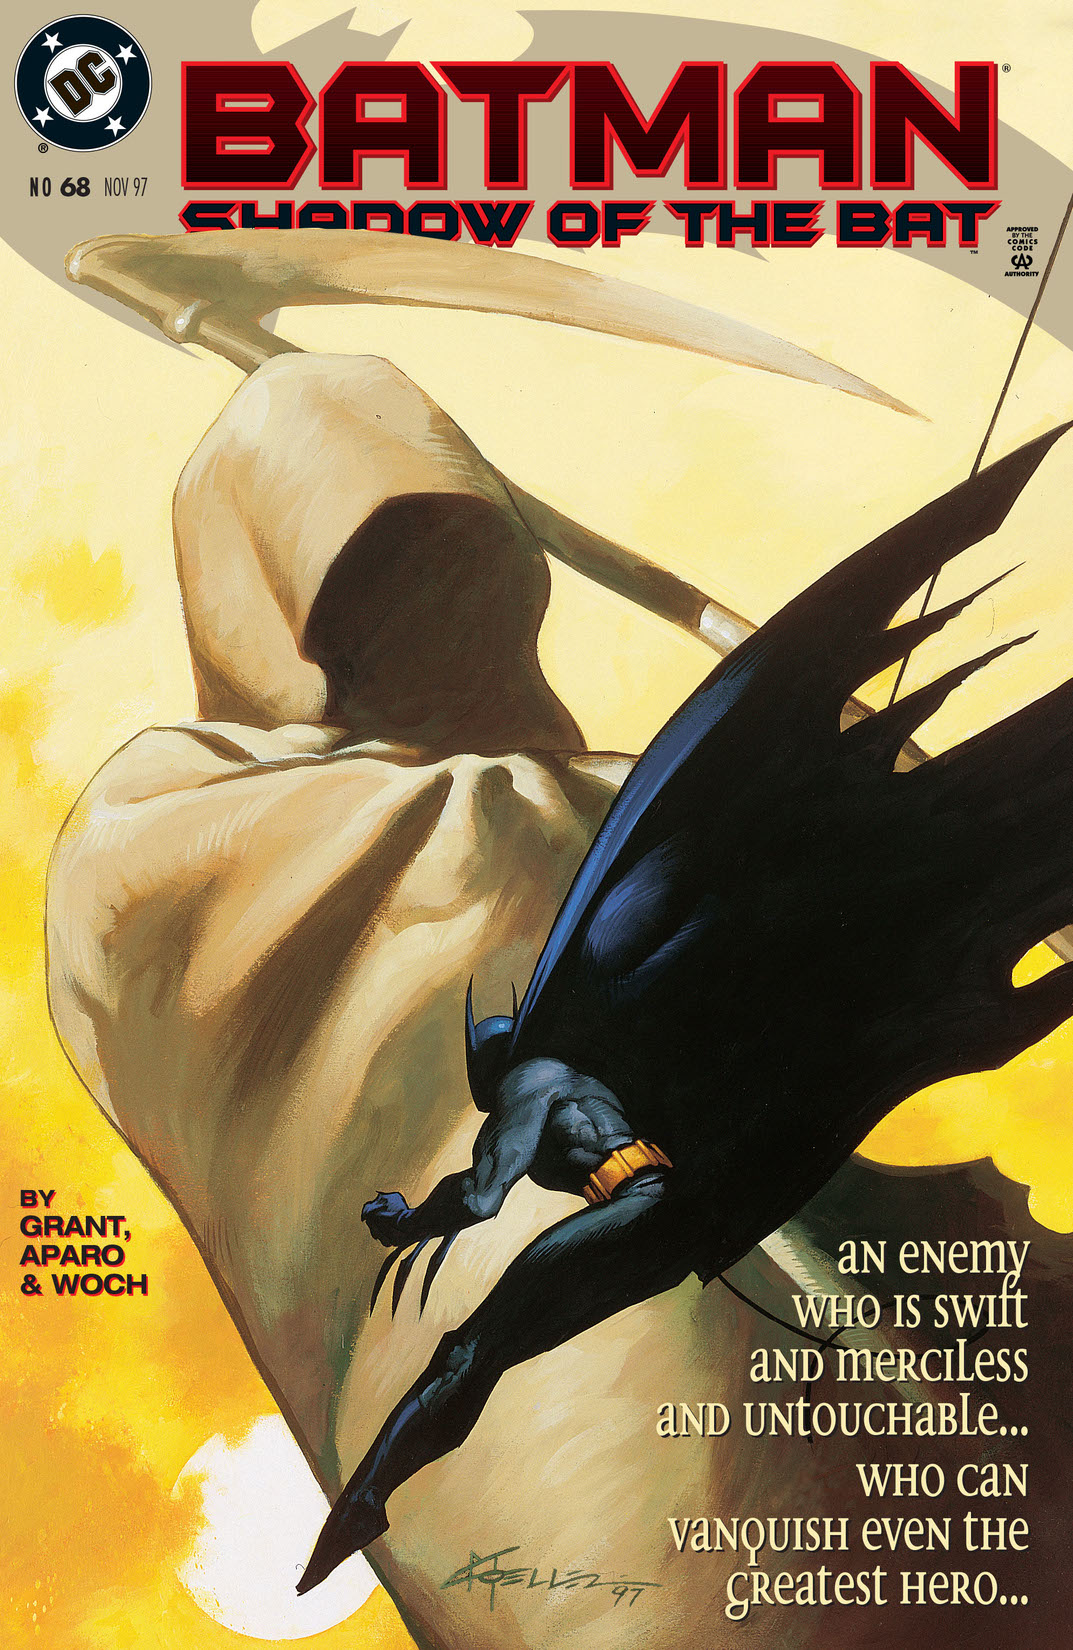 Batman: Shadow of the Bat #68 preview images